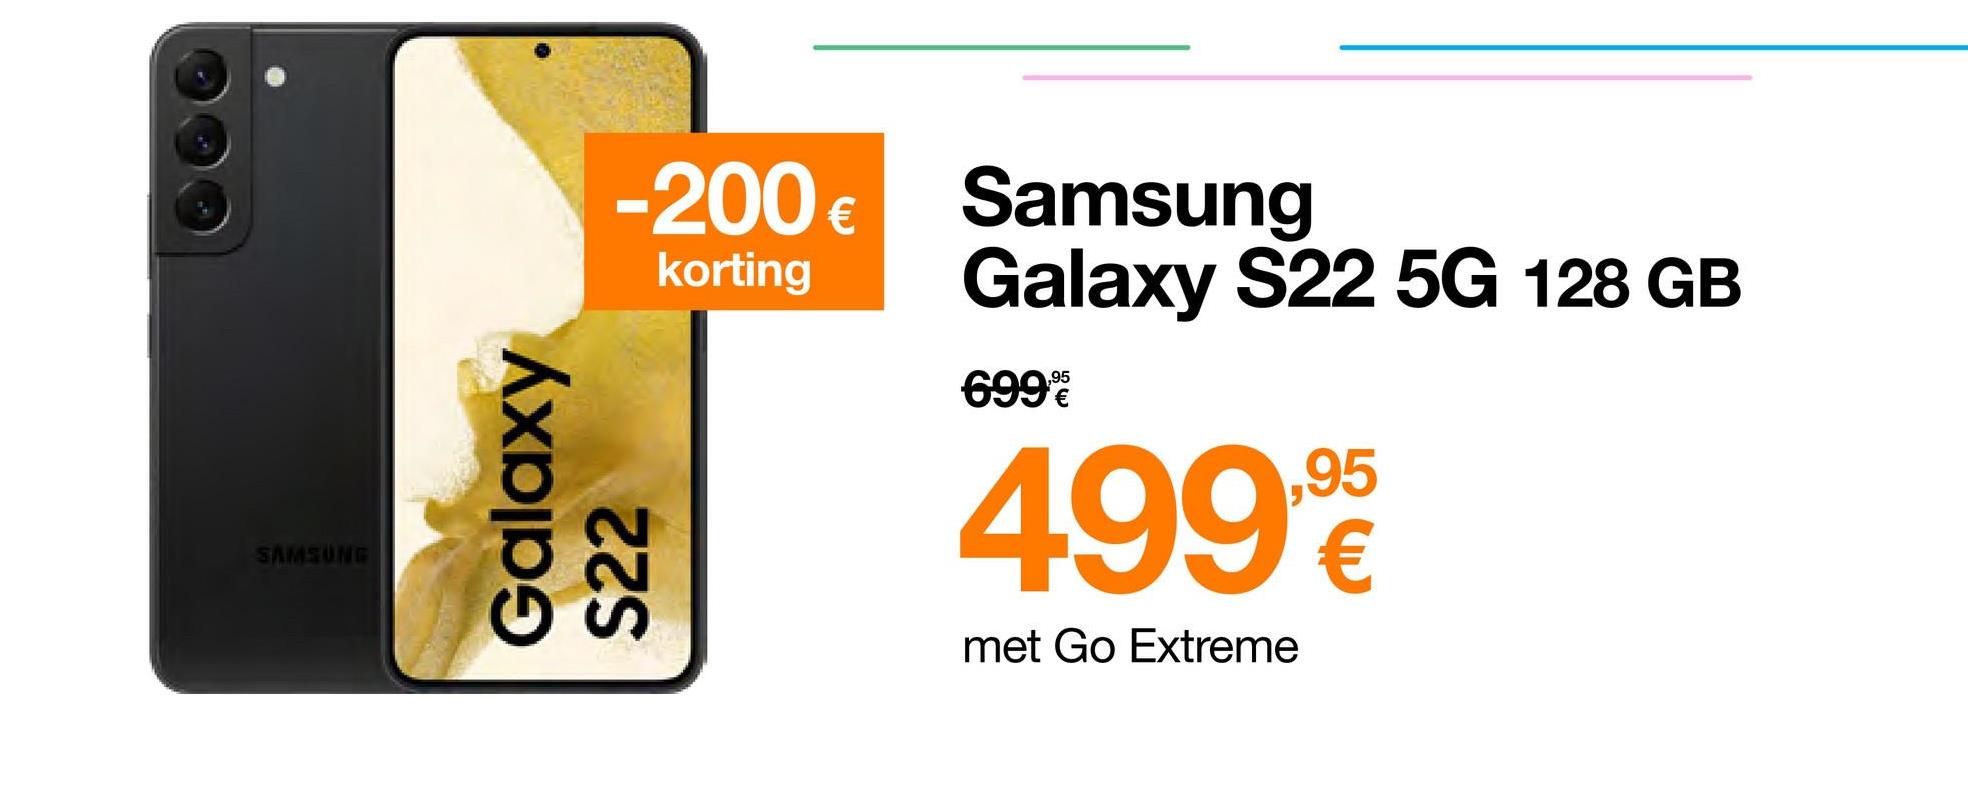 SAMSUNG
-200 € Samsung
Galaxy S22 5G 128 GB
korting
Galaxy
S22
699%
499,9
met Go Extreme